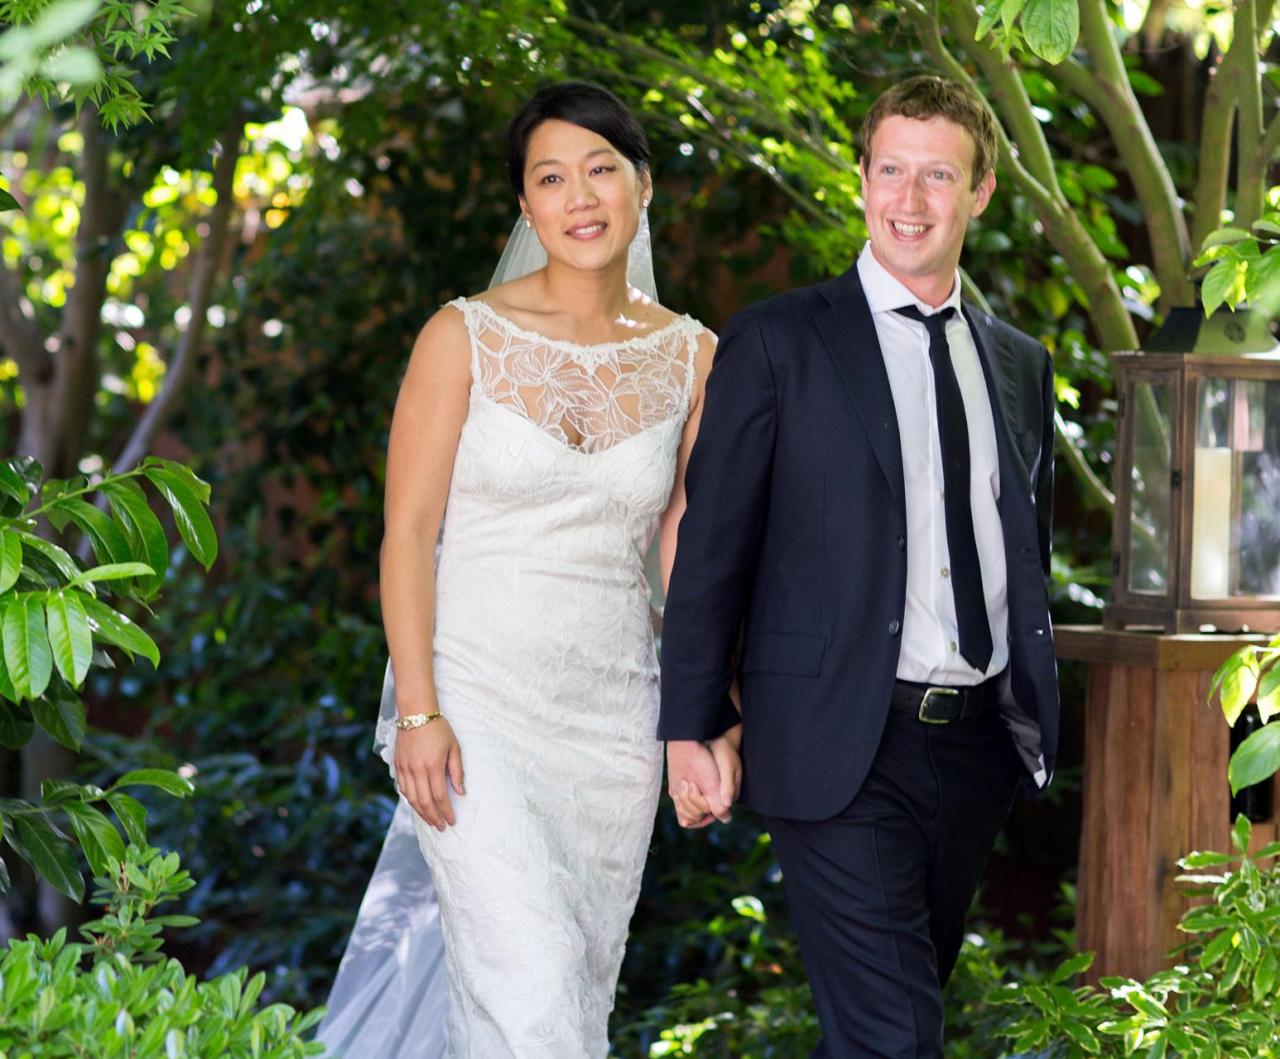 Mark Zuckerberg Marries Priscilla Chan